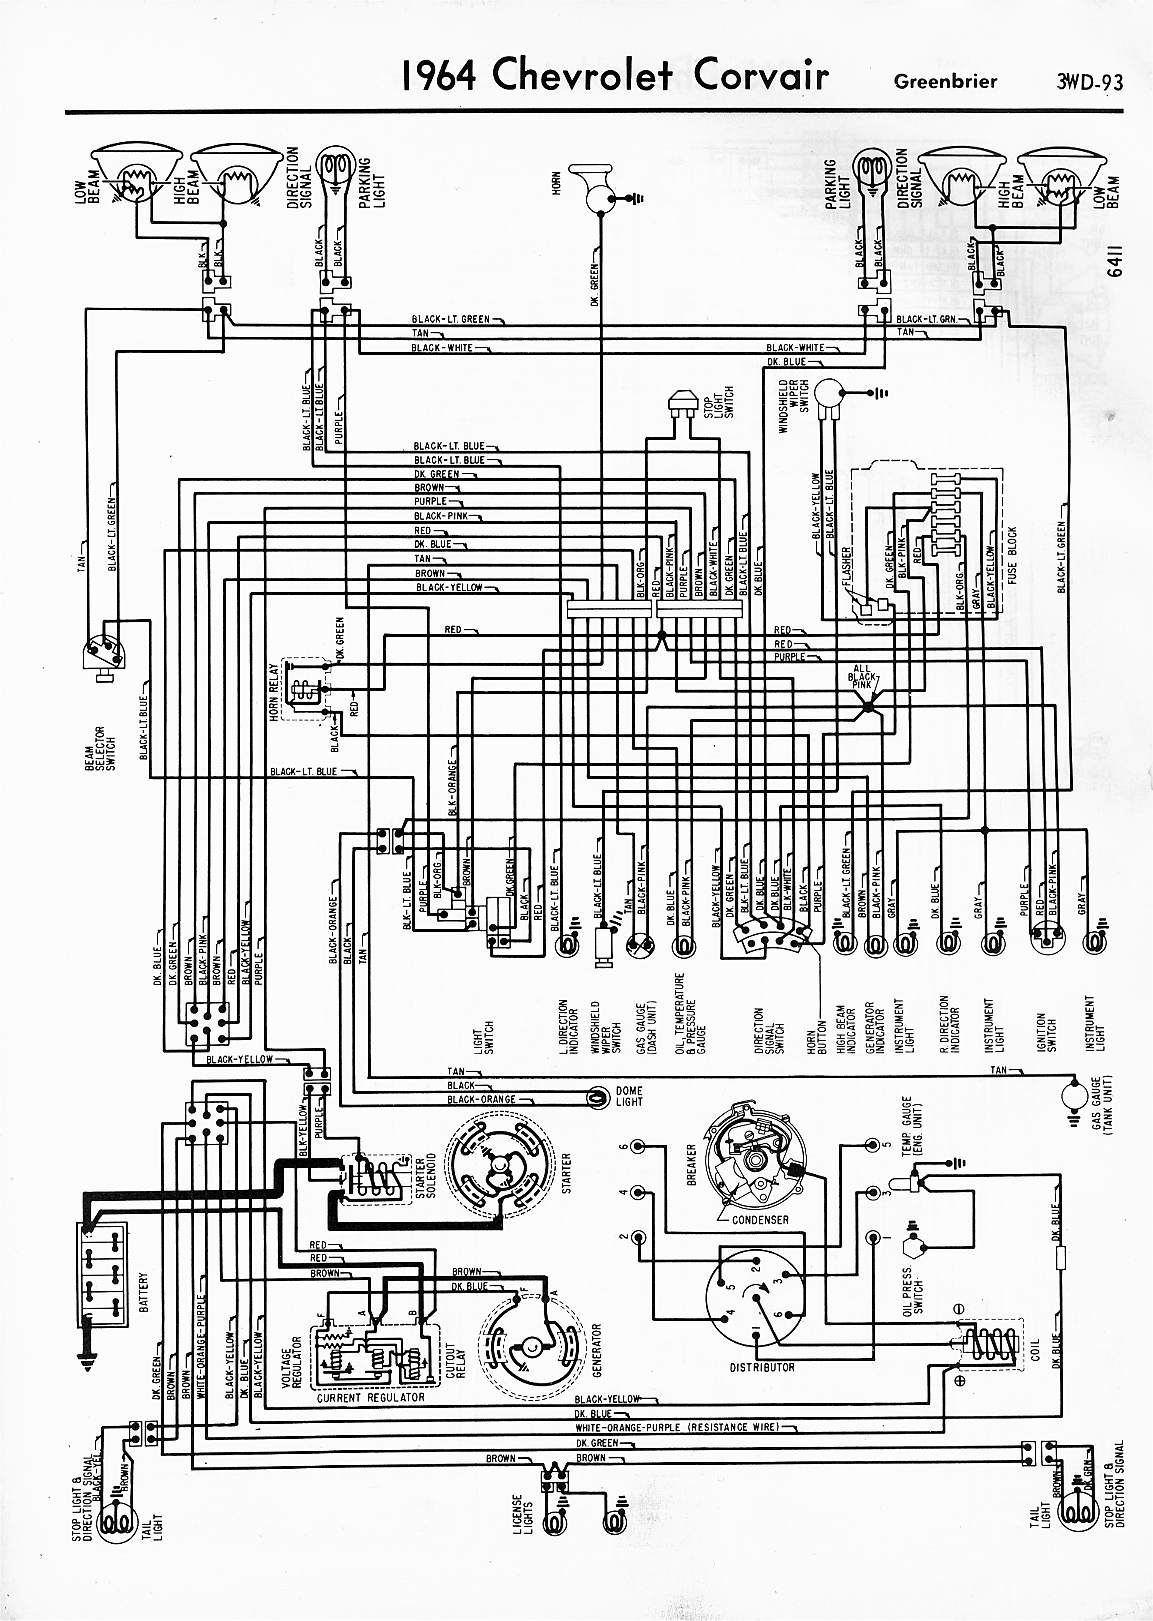 57 - 65 Chevy Wiring Diagrams 2006 grand prix headlight wiring diagram 